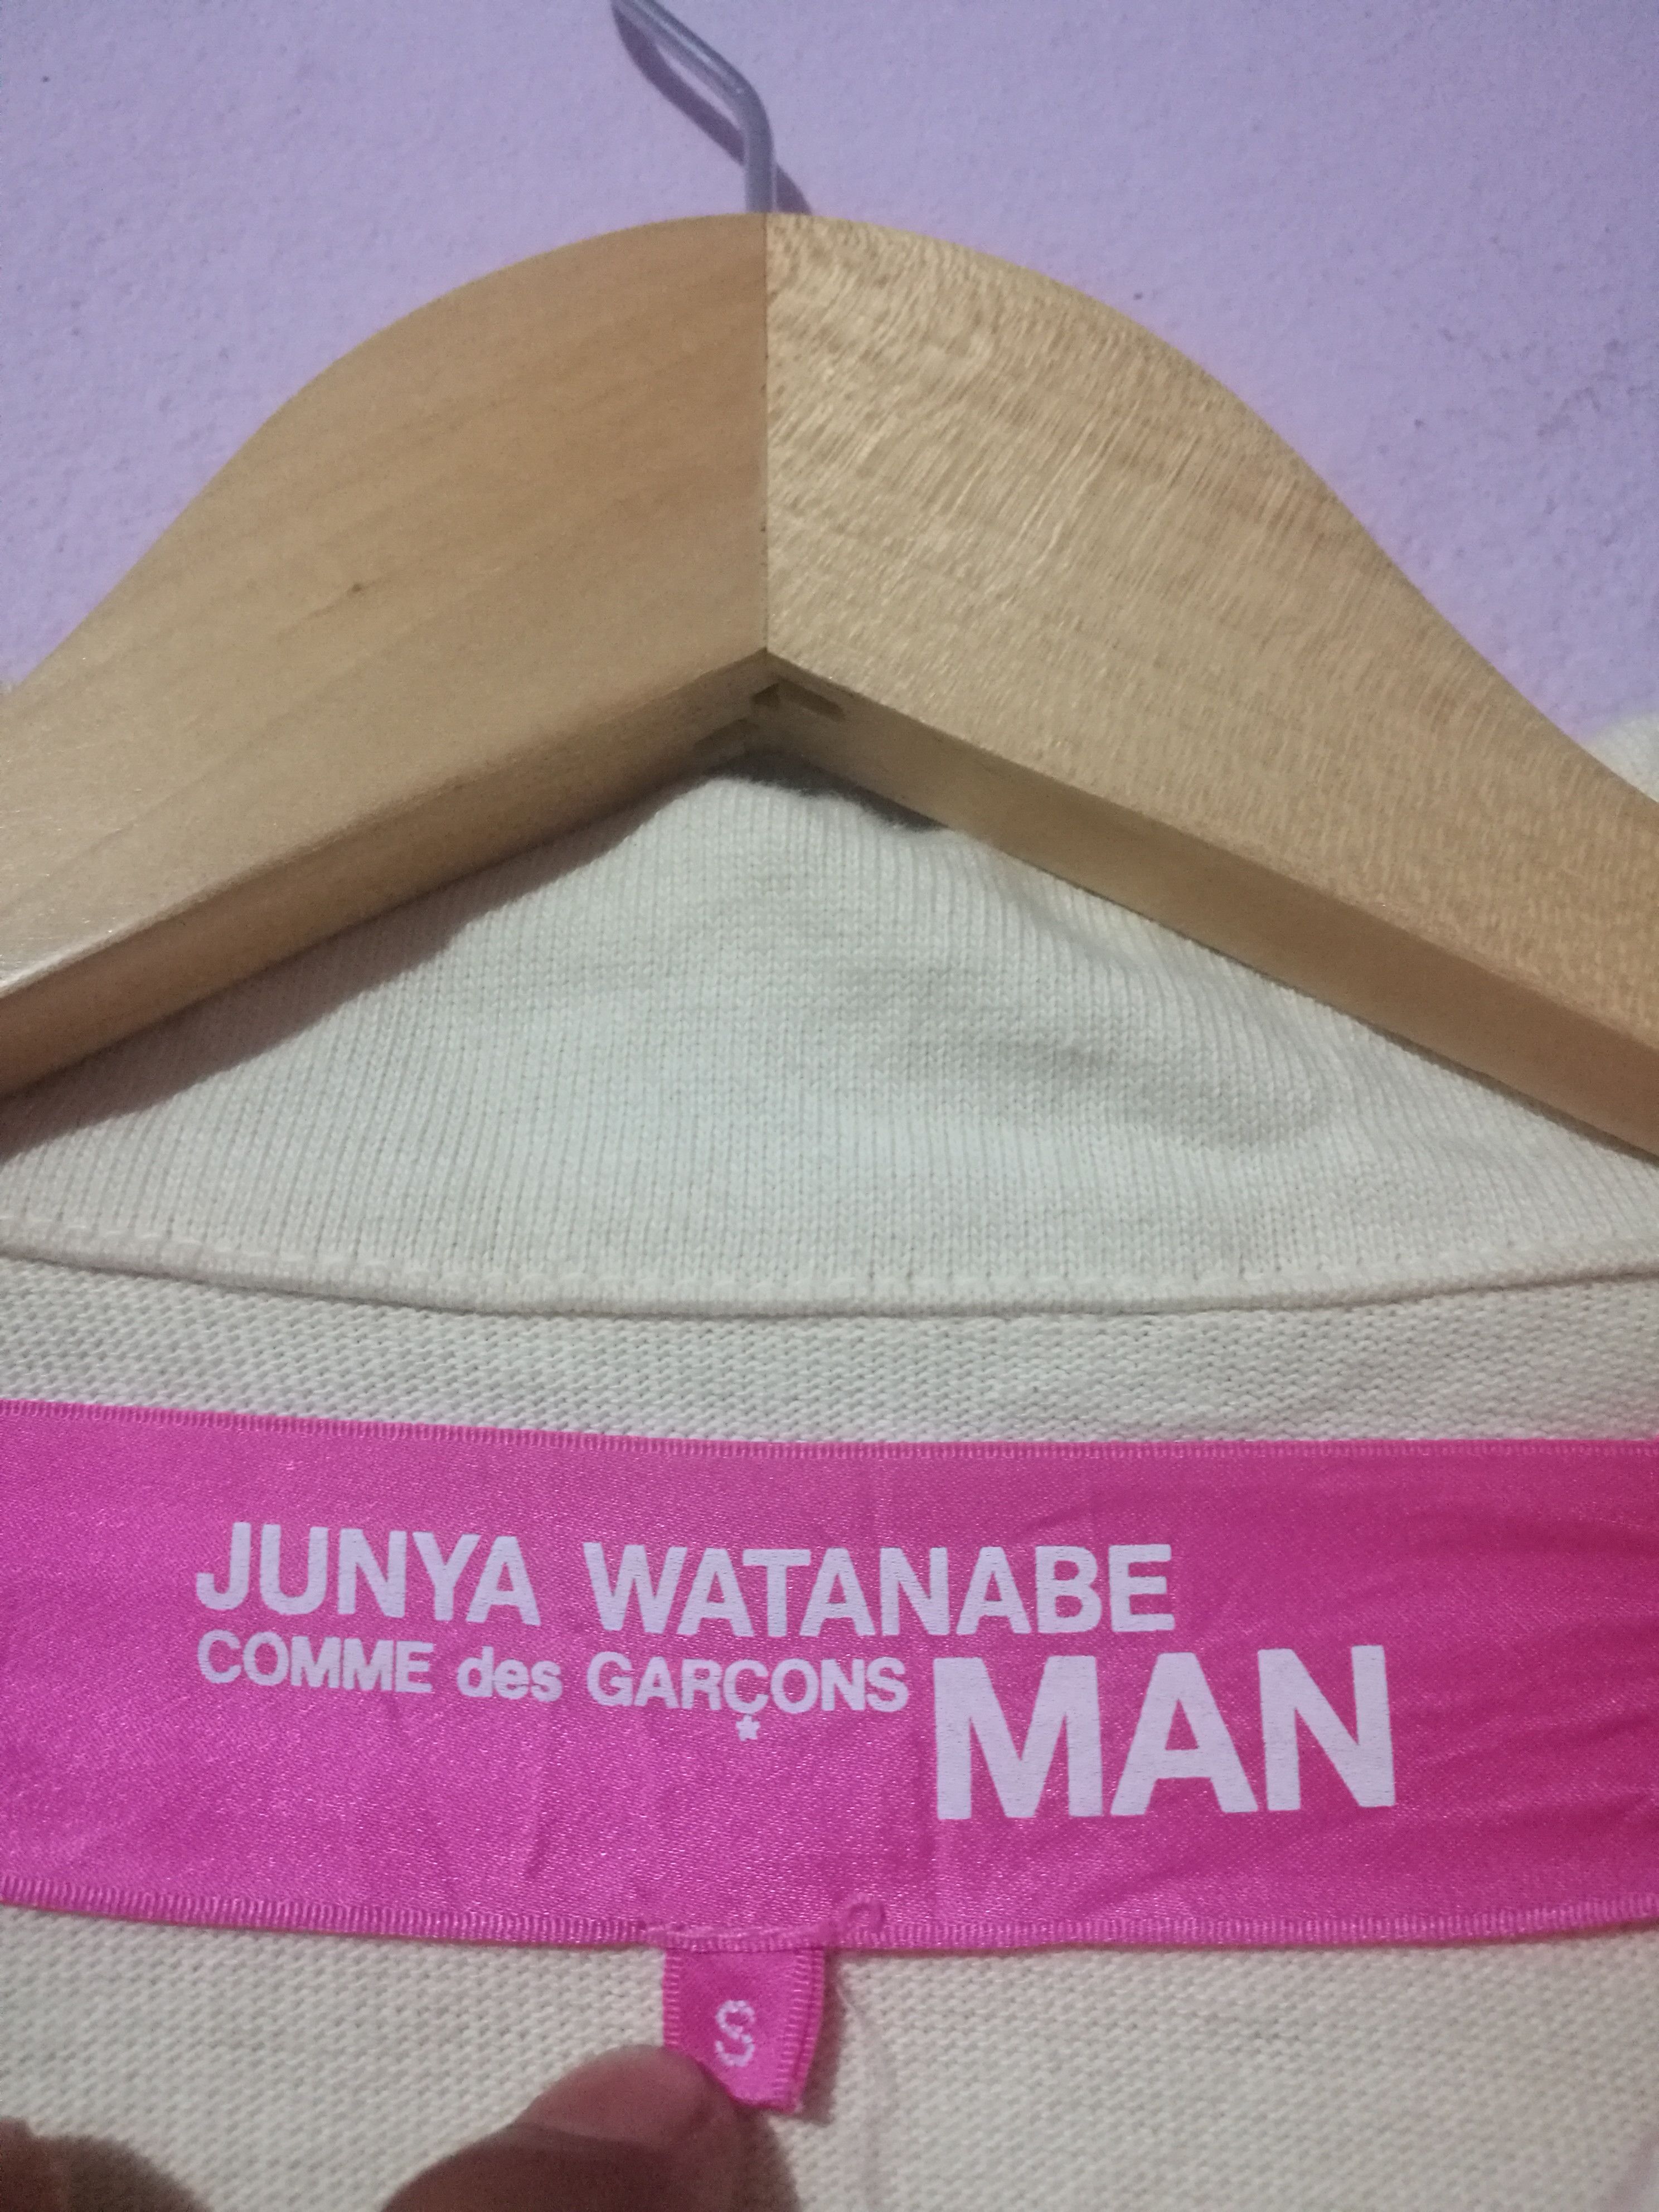 Junya Watanabe Junya Watanabe Man X Comme des Garcon Jackets Made in Japan Size US S / EU 44-46 / 1 - 5 Thumbnail